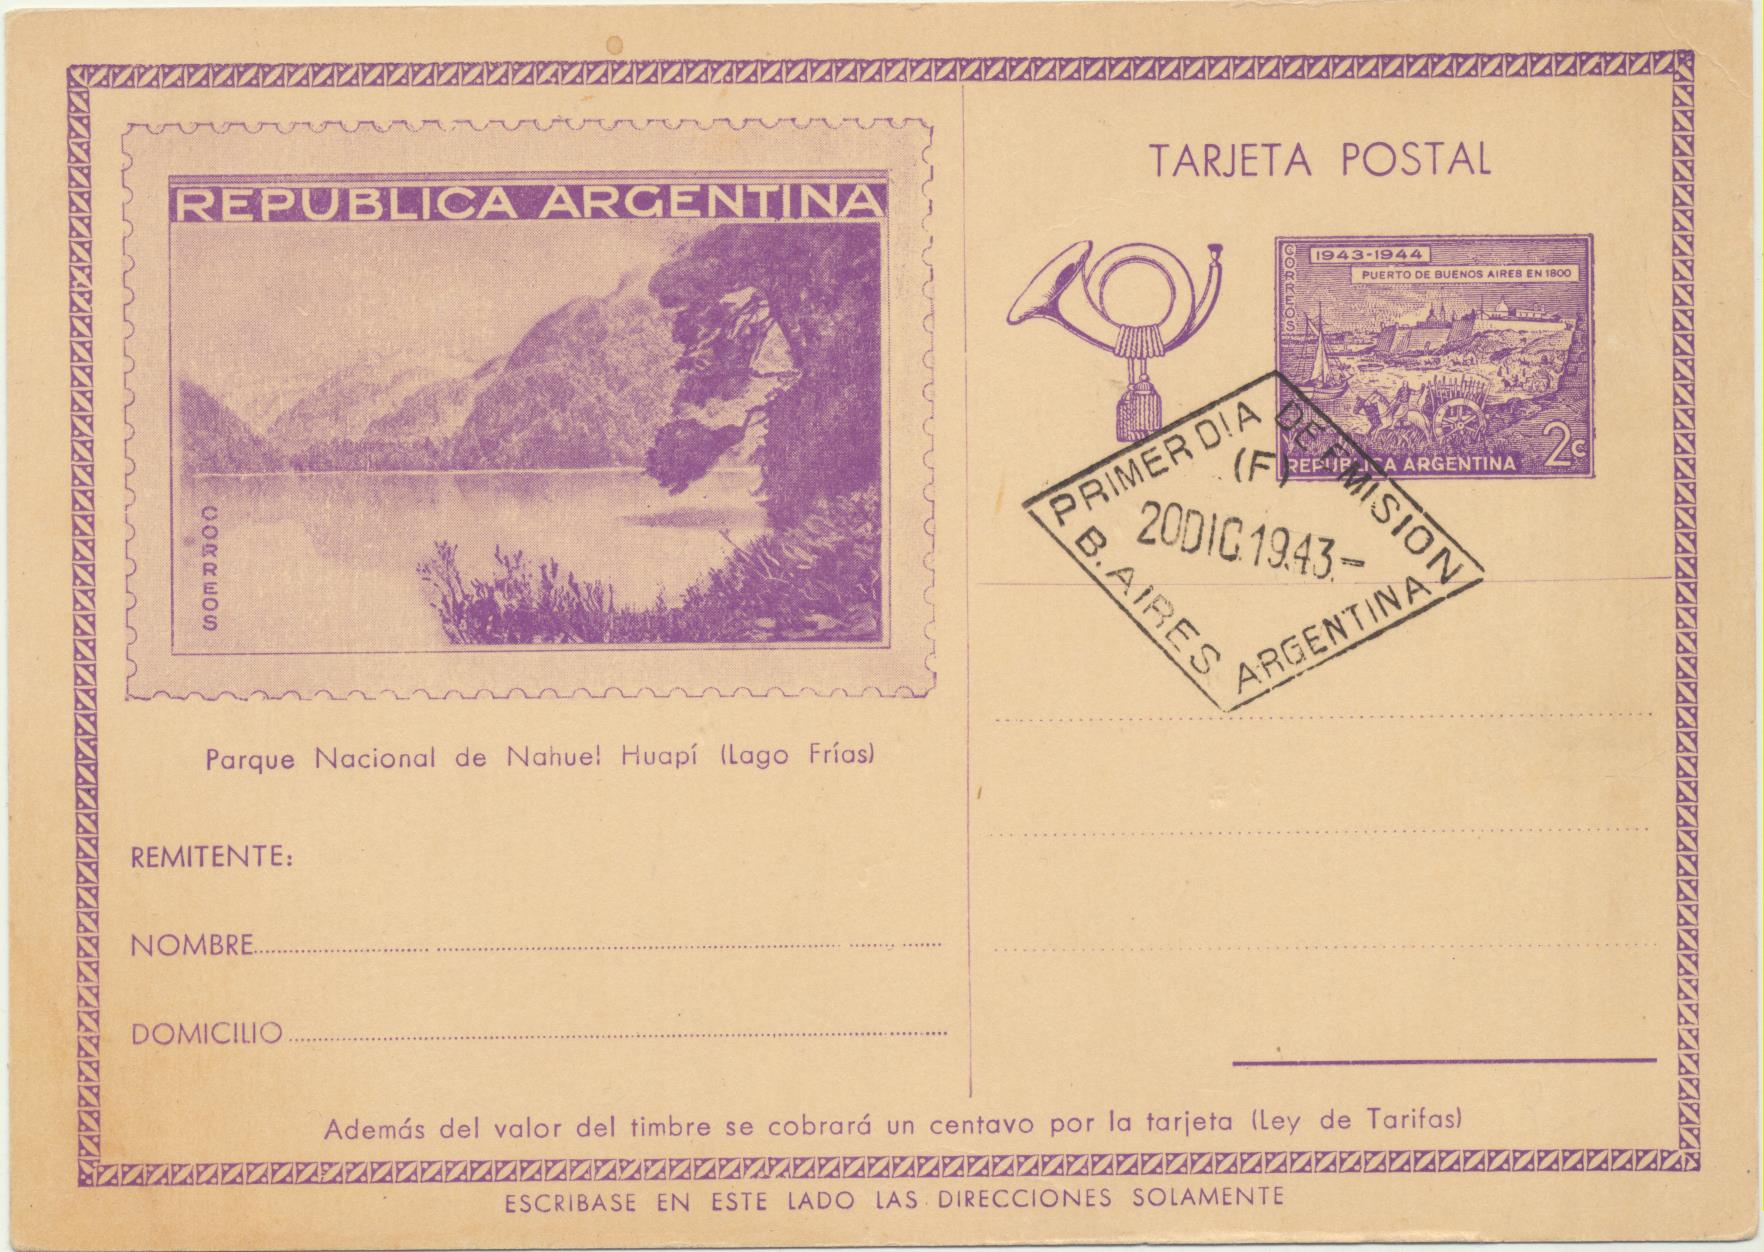 Argentina. Entero Postal (2 c.) P. nacional de Nahuel Huapí. Primer Día de emisión 20-Dic. 1943